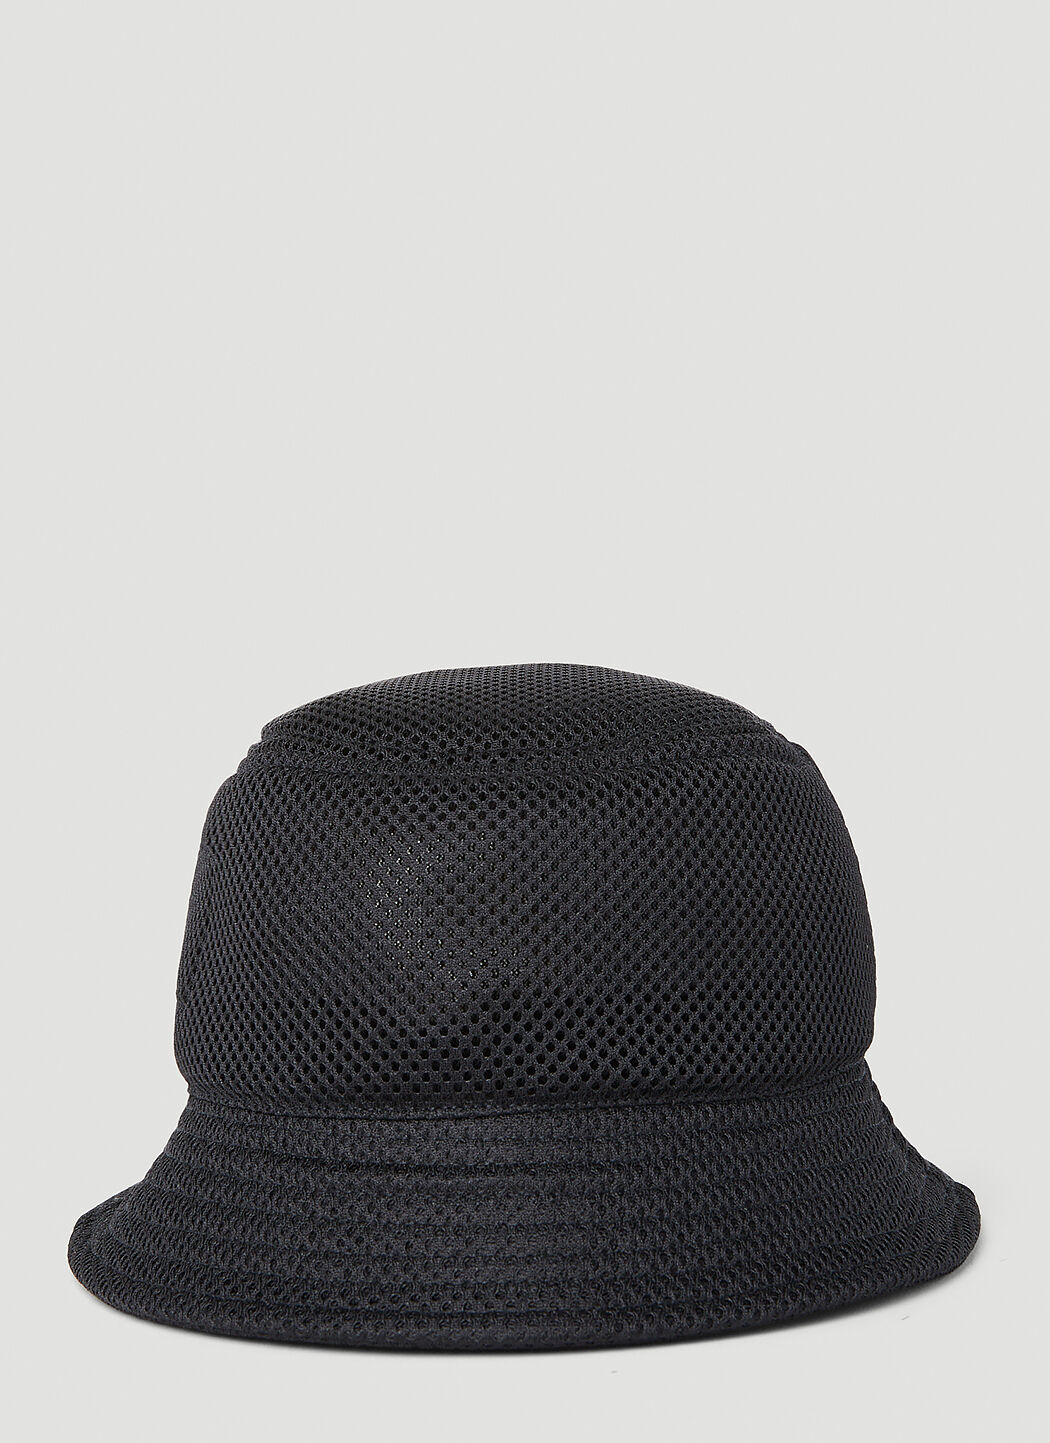 Rick Owens x Champion Women's Gilligan Hat in Black | LN-CC®